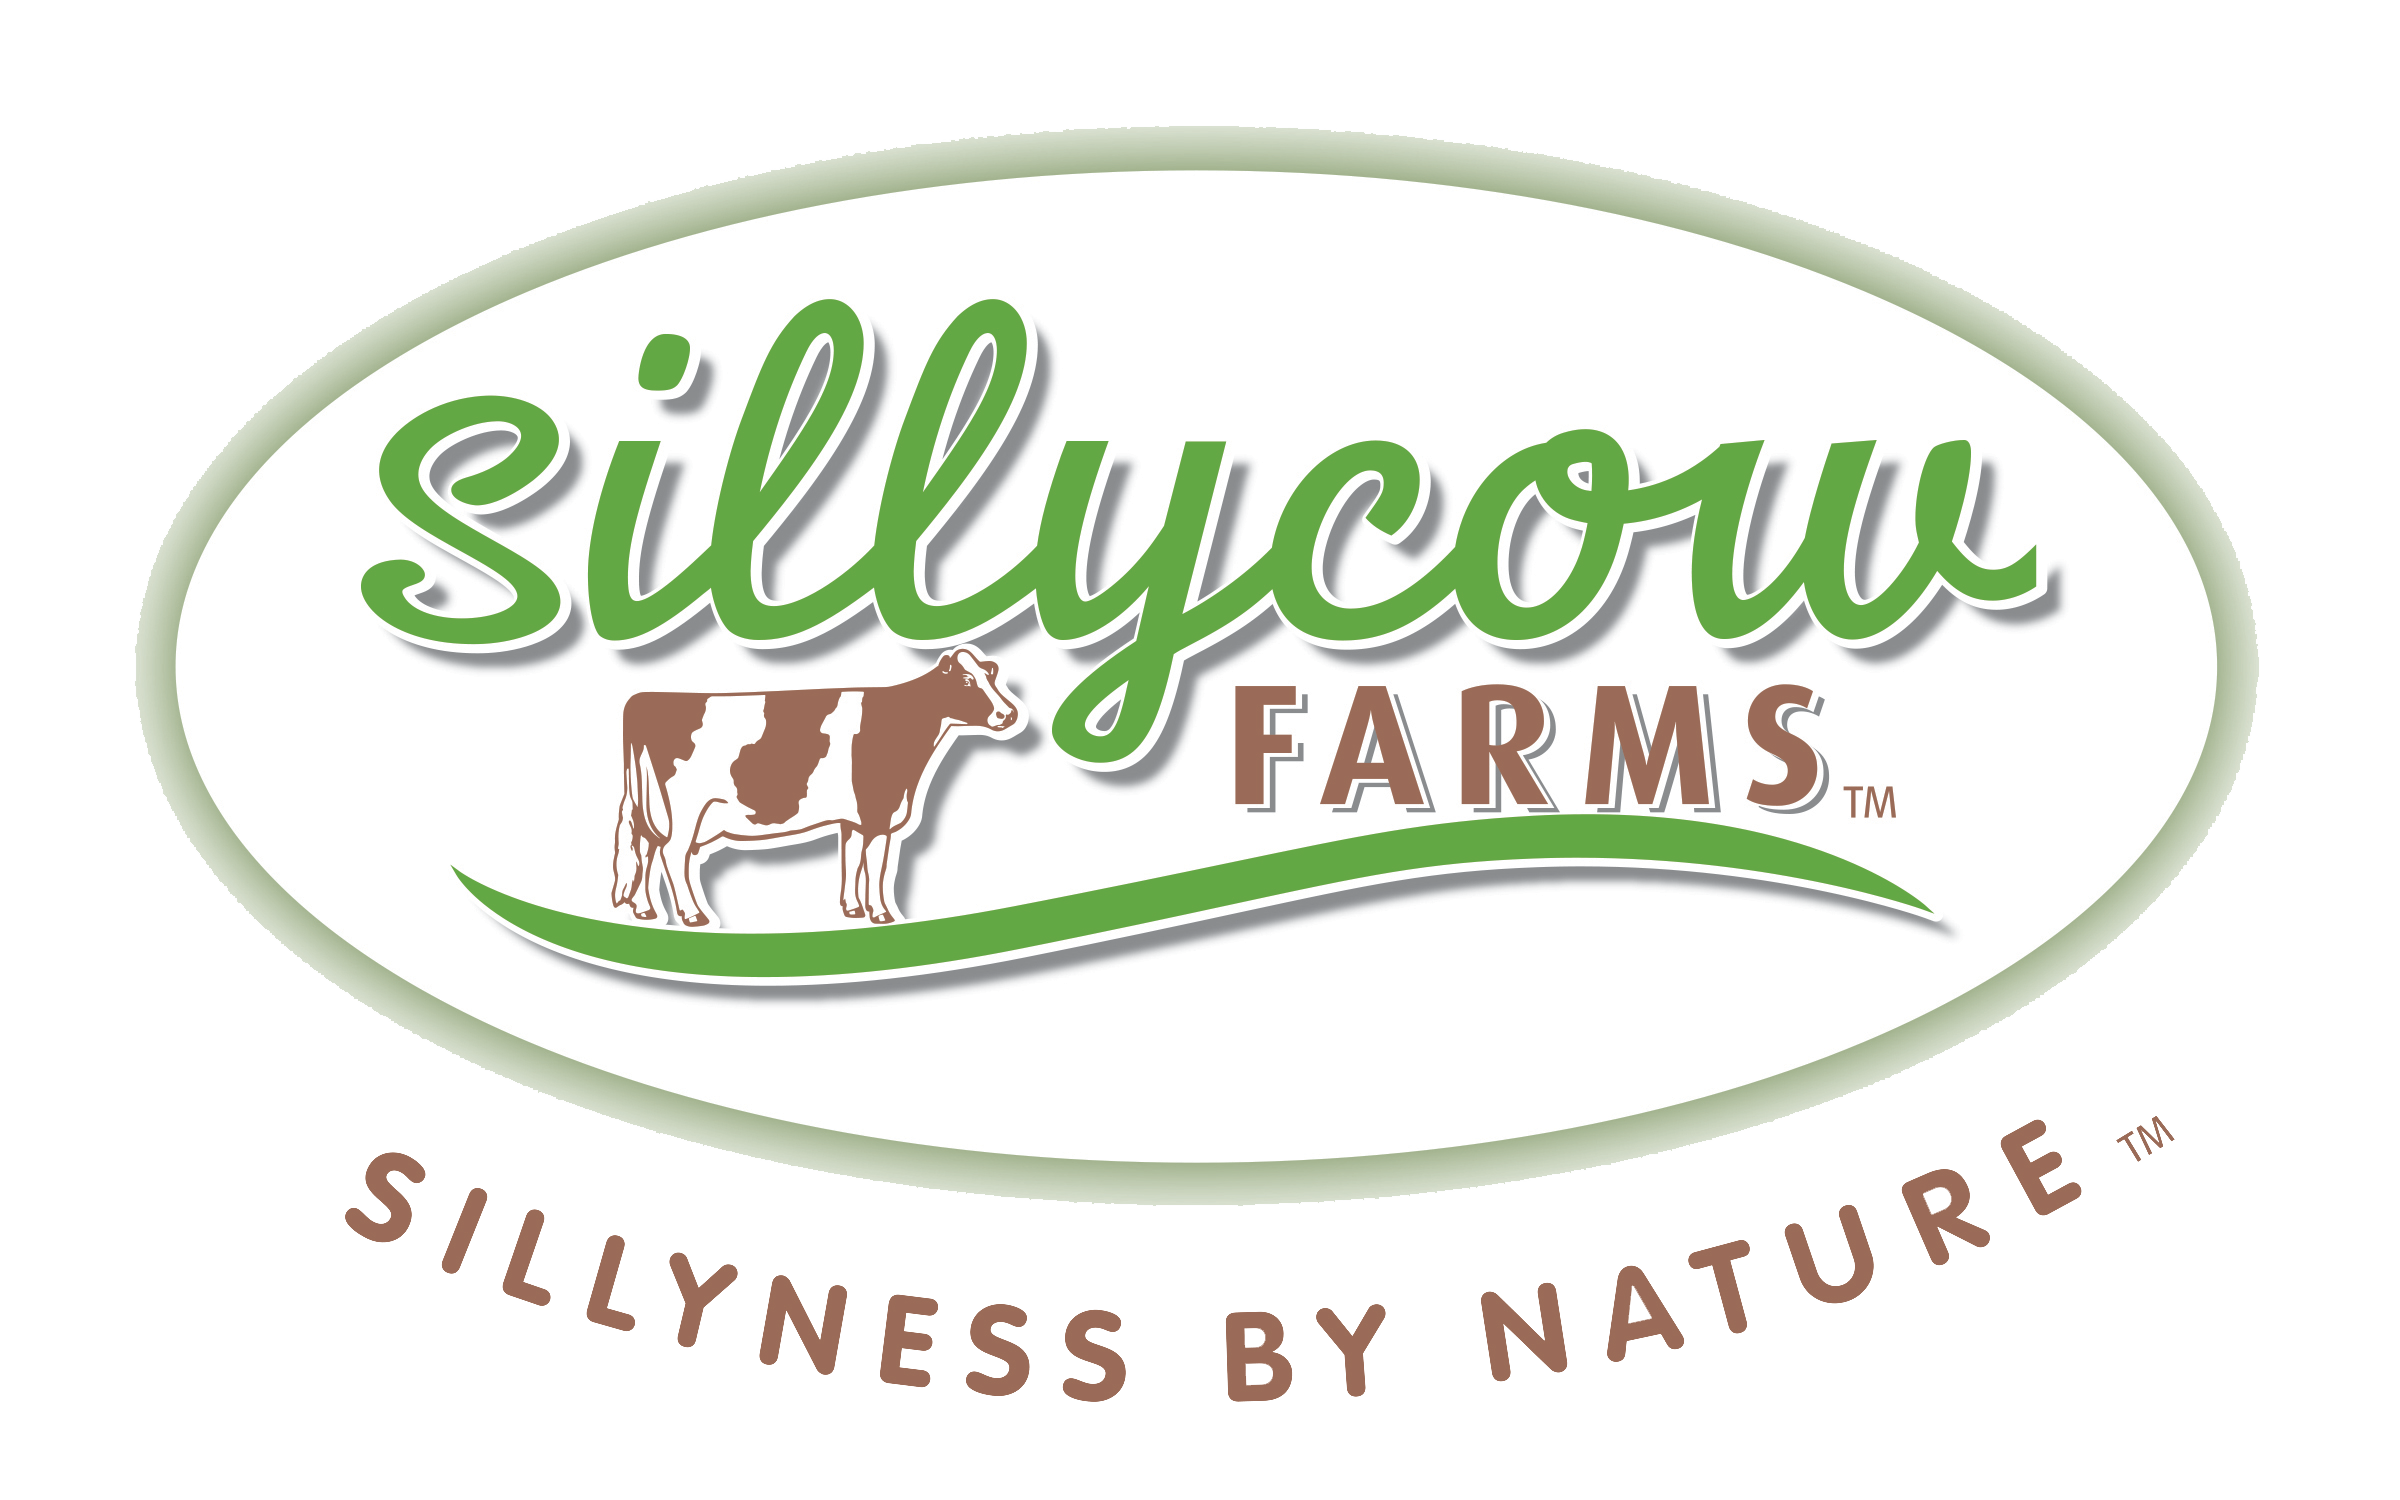 Sillycow Farms